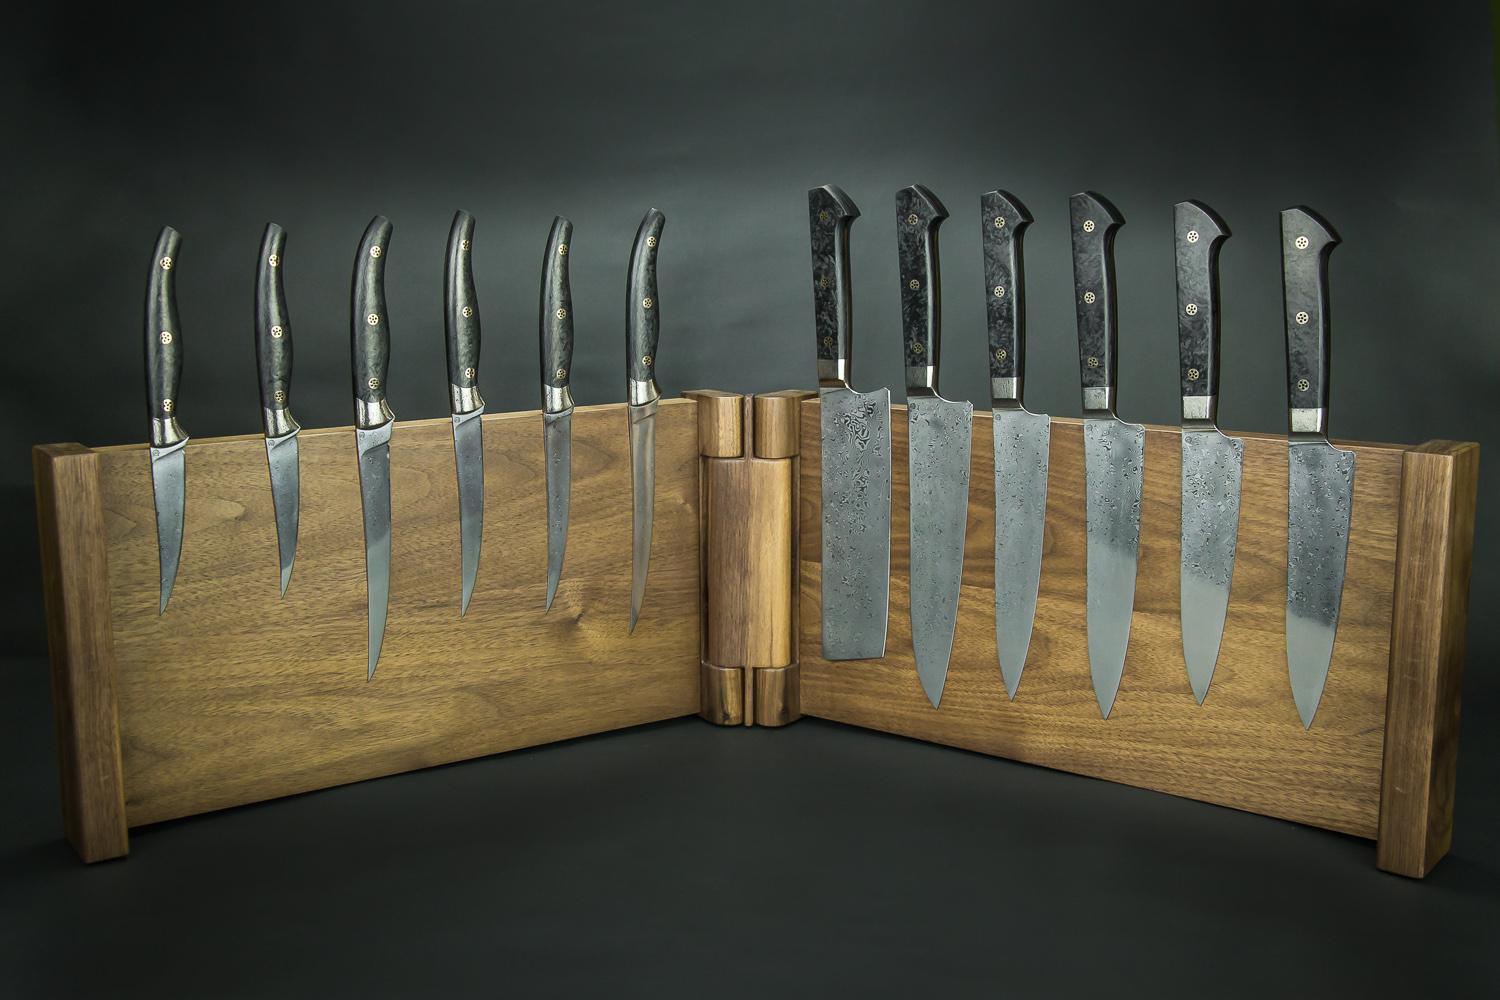 формы кухонных ножей фото